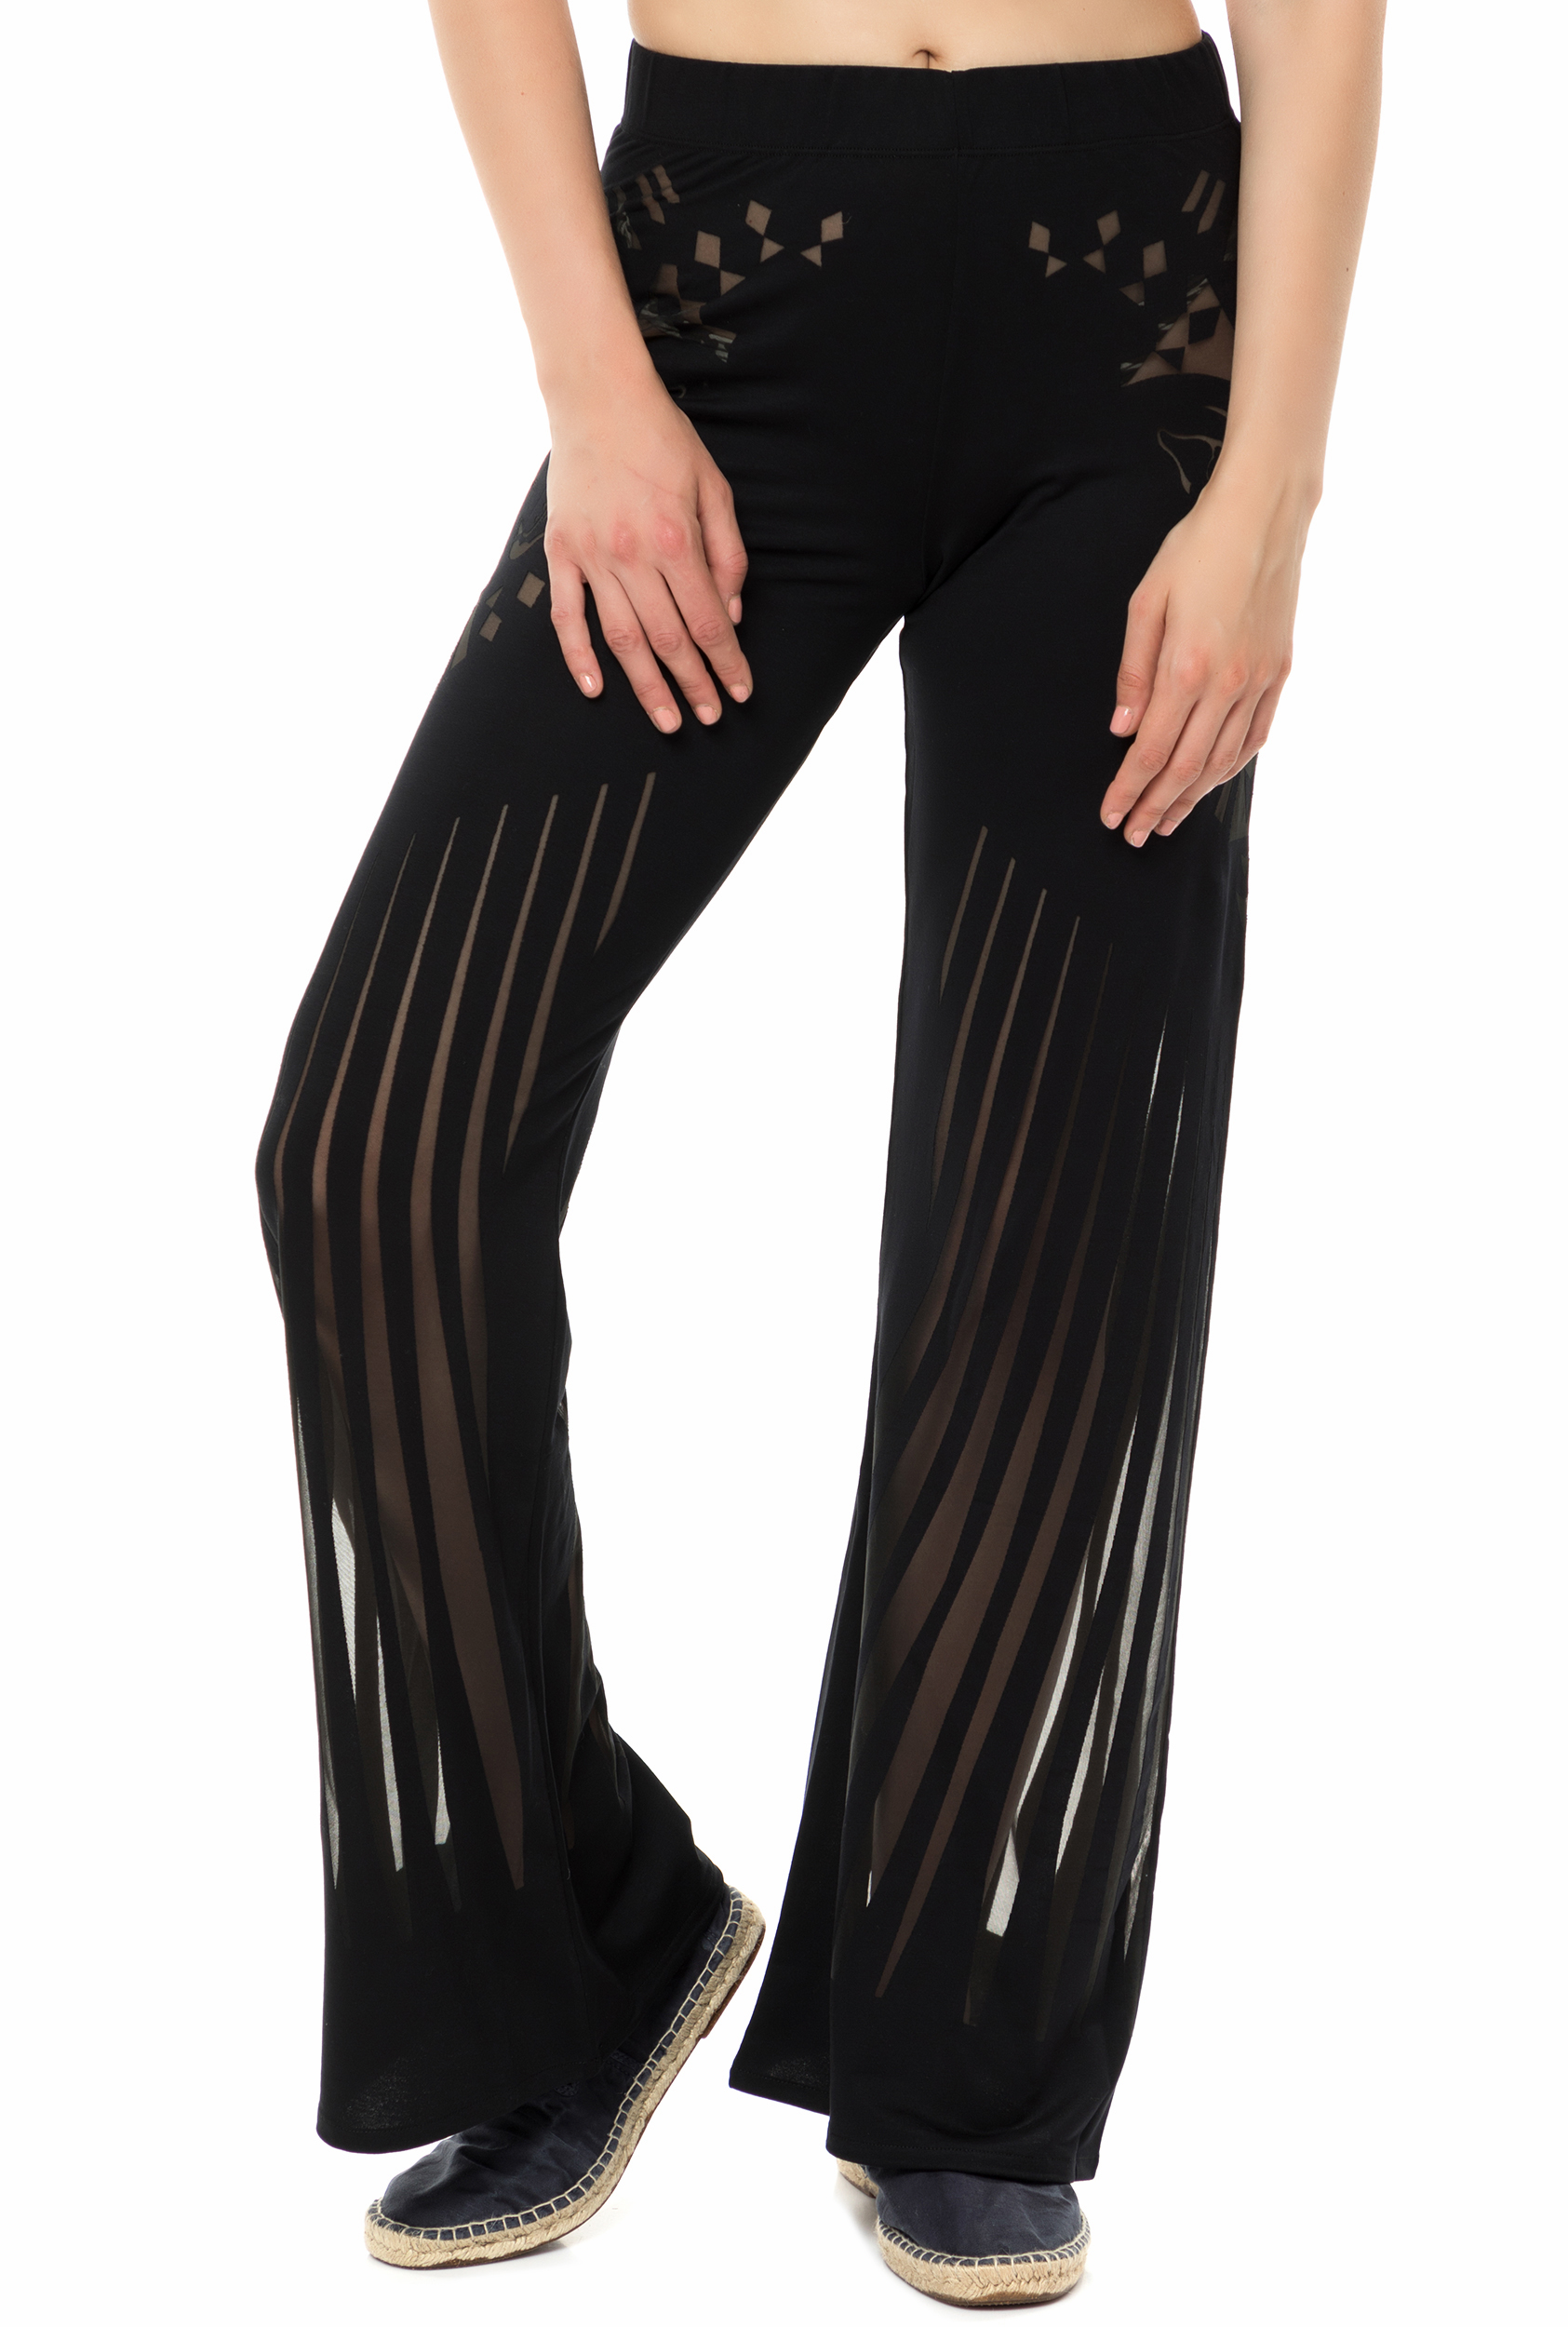 PIN UP - Γυναικεία beachwear παντελόνα PIN UP μαύρη με διαφάνειες Γυναικεία/Ρούχα/Παντελόνια/Παντελόνες